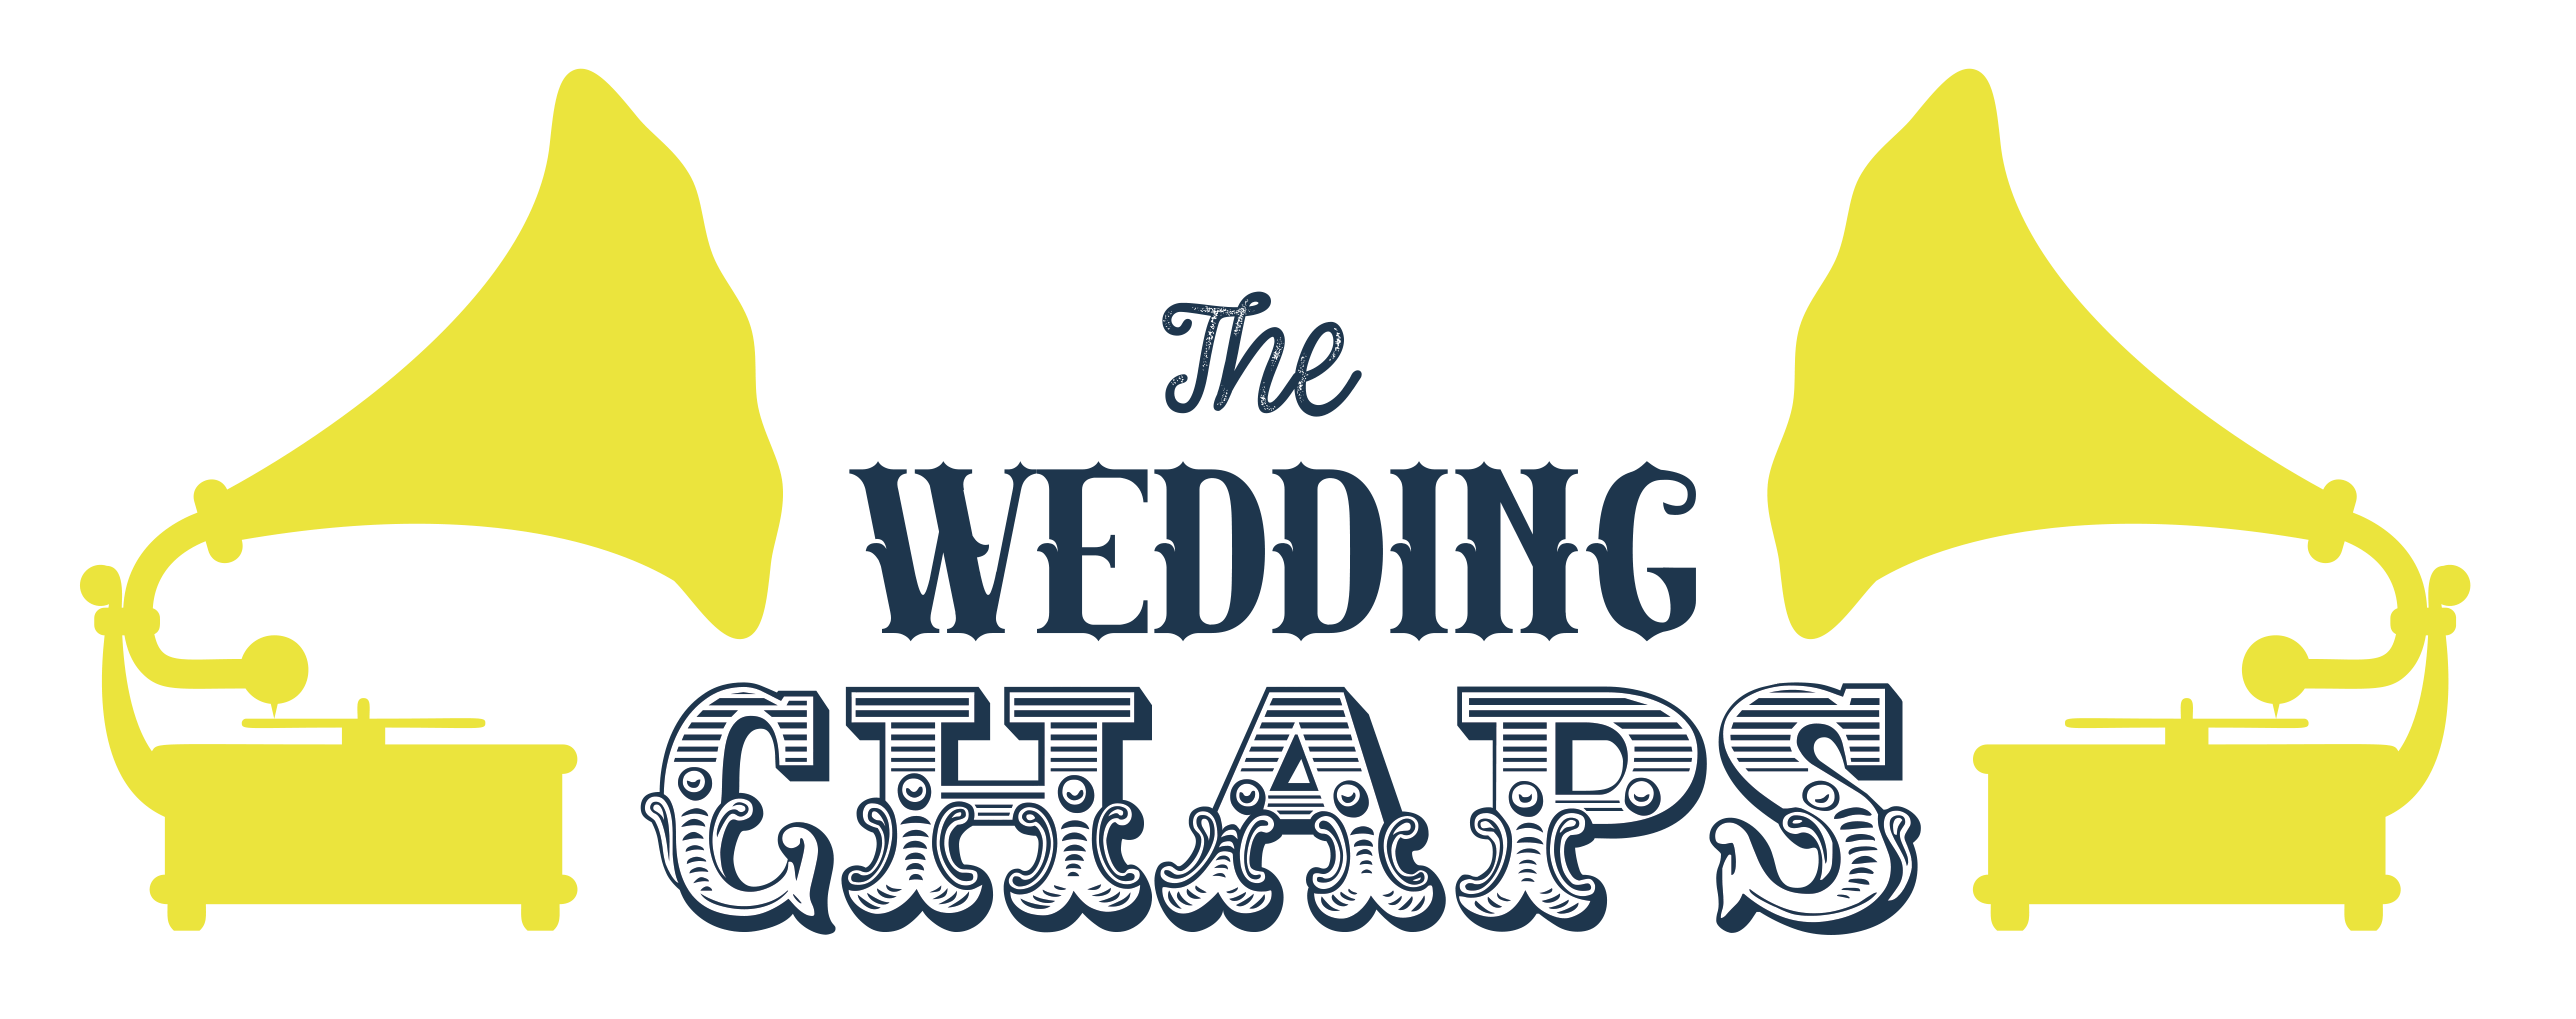 Chaps Logo - The Wedding Chaps - A Collective of Kent Wedding Expert DJs